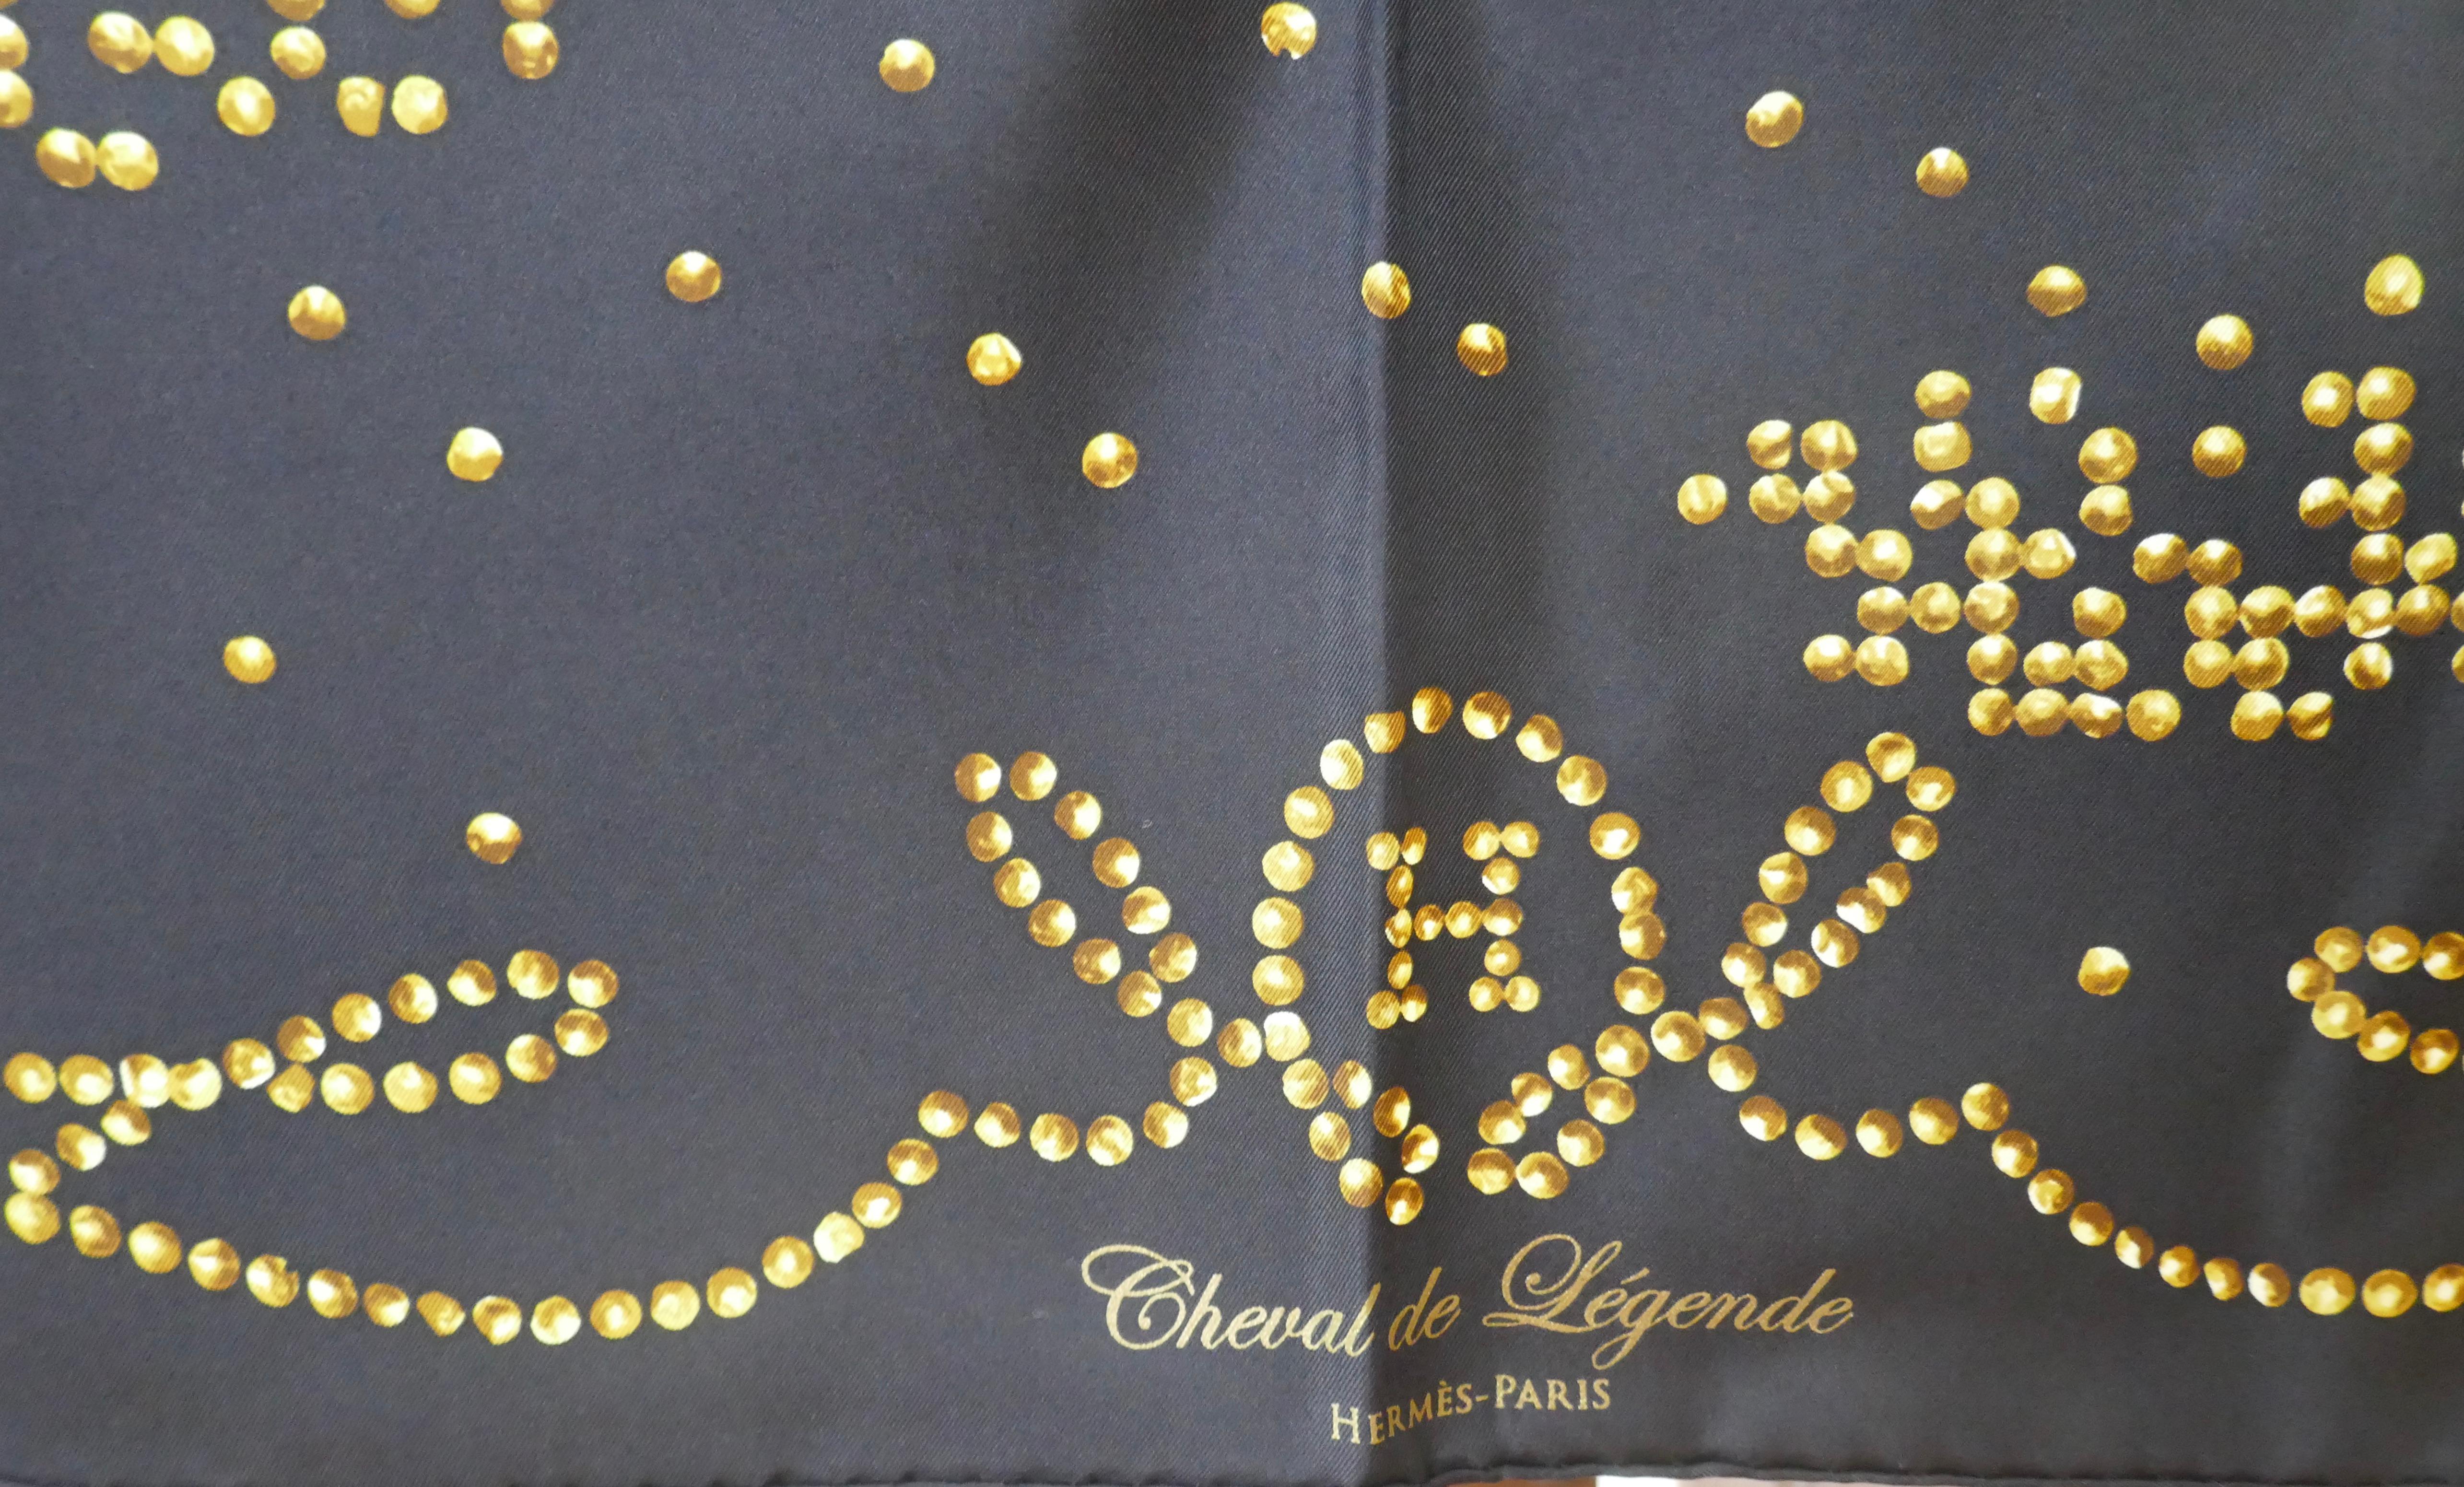 Very Rare 2010 Hermes Silk Scarf “ Cheval de Legende” by  Benoit Pierre Emery 1